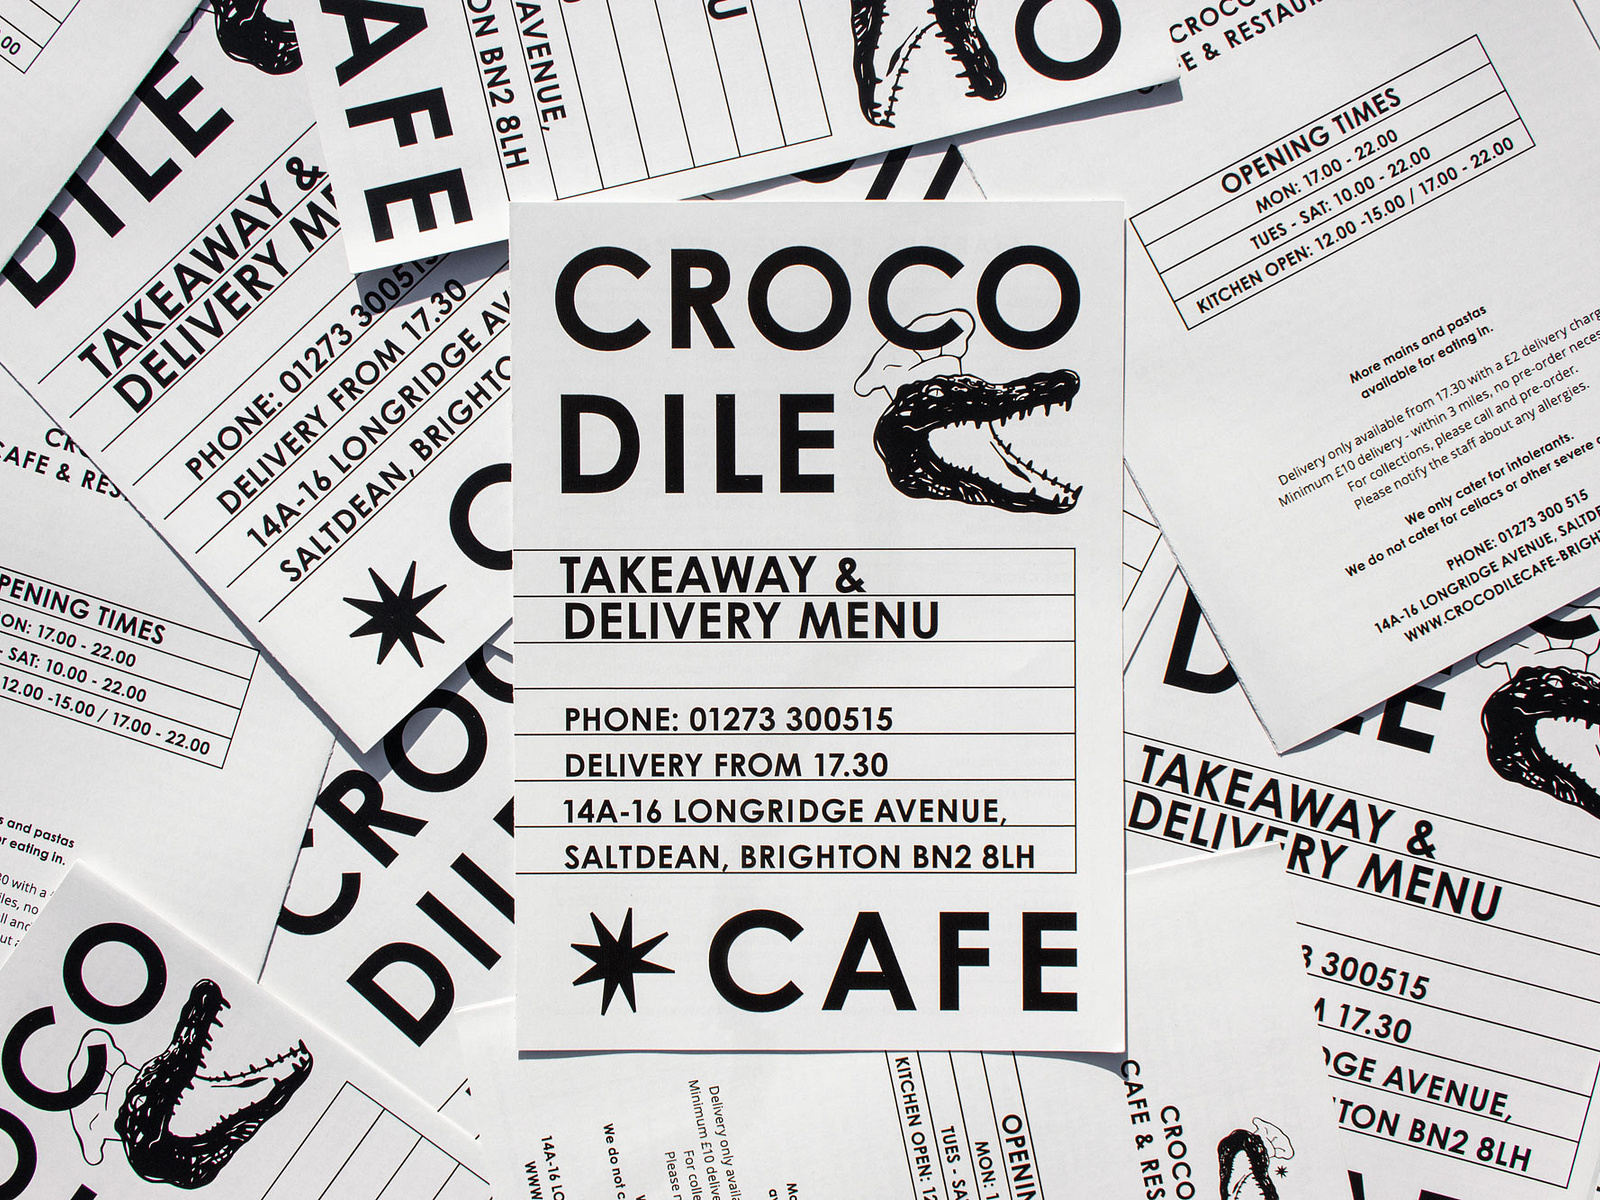 Crocodile Cafe Flyer by Nayari Cepeda on Dribbble